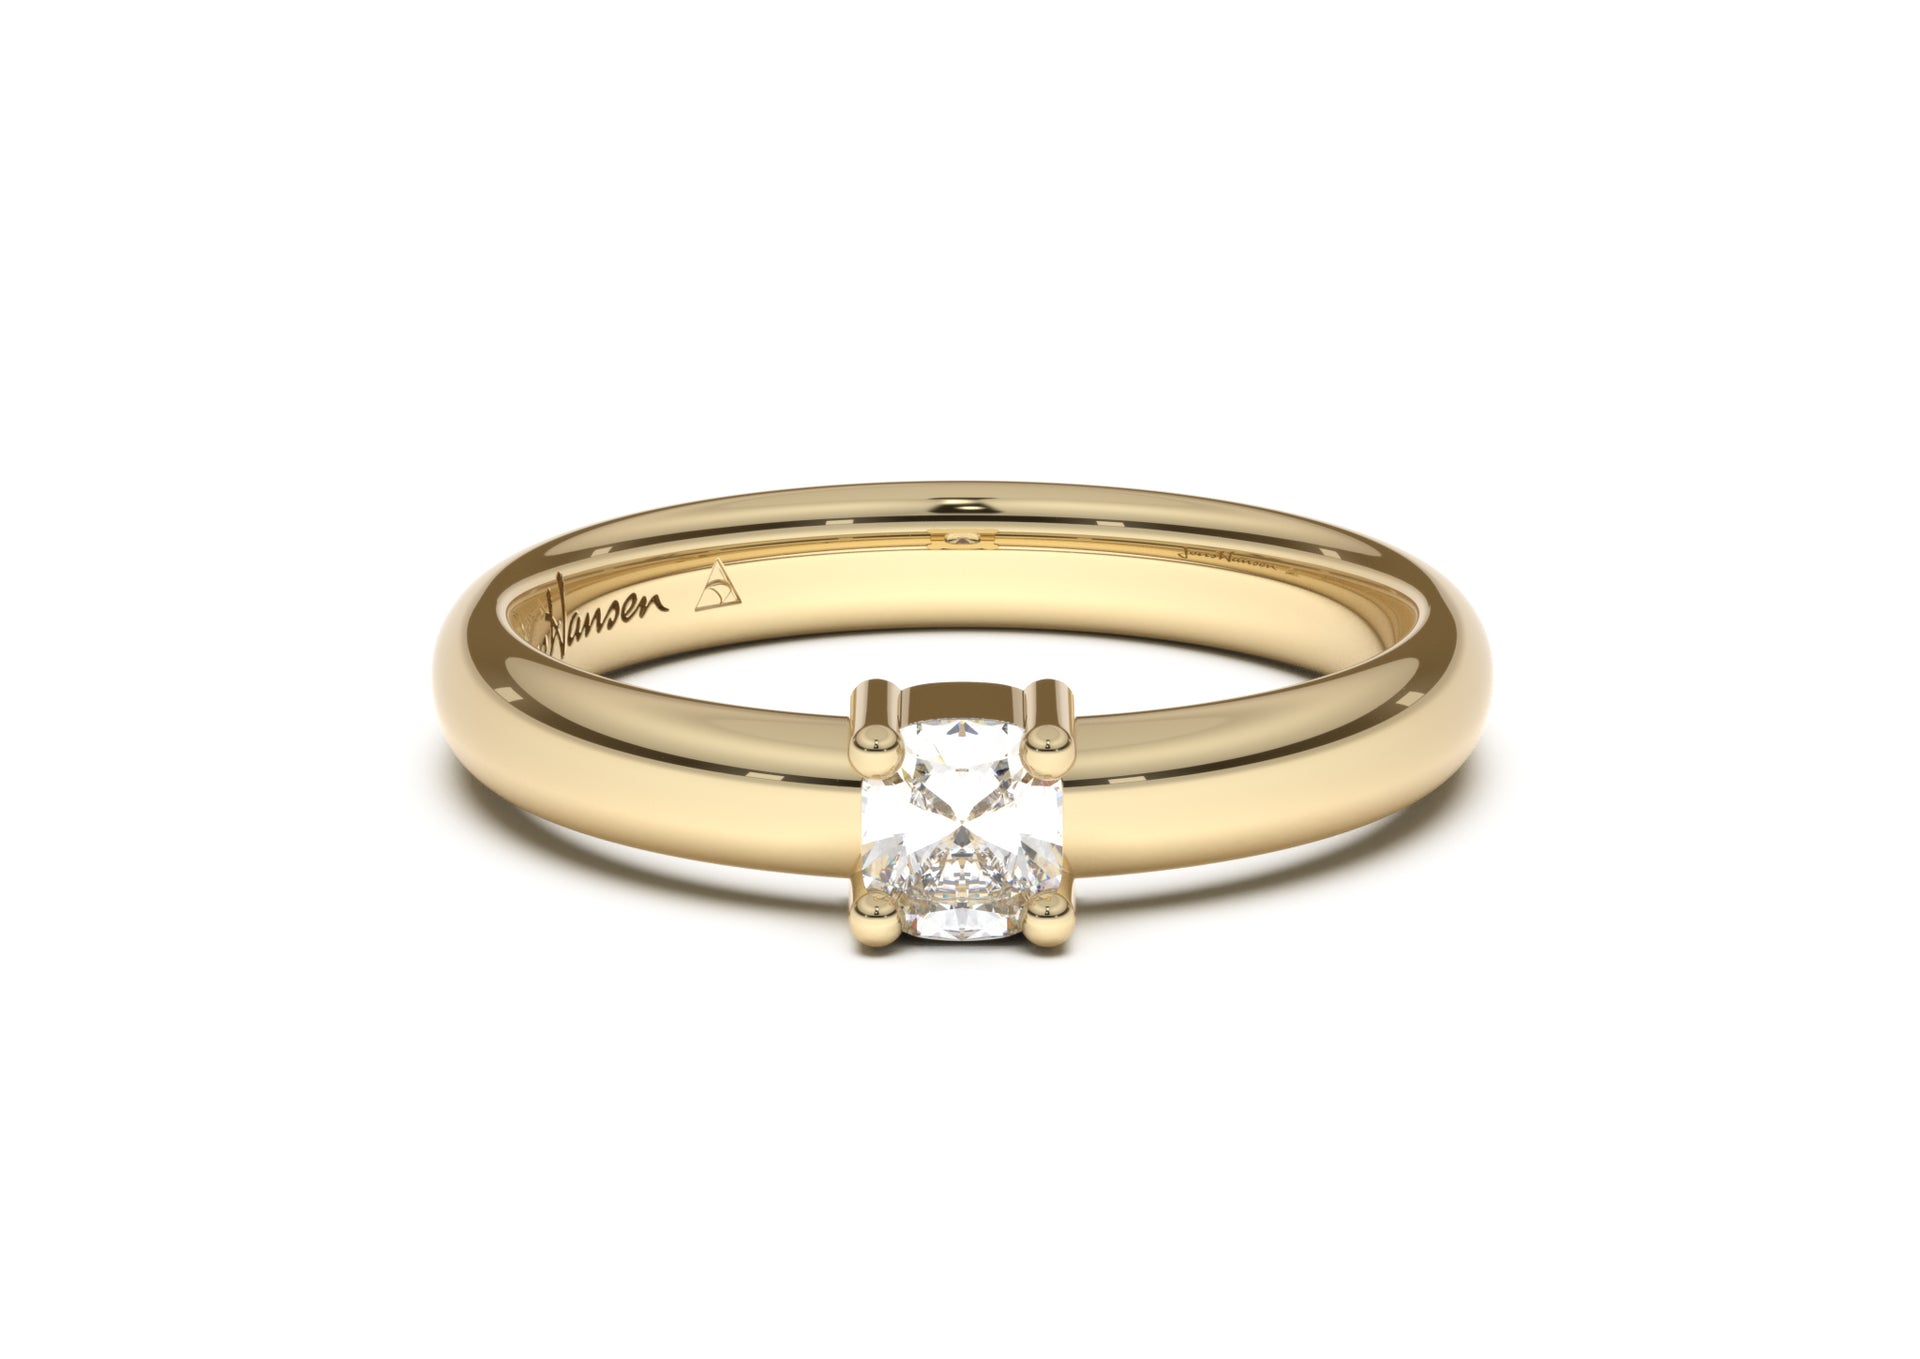 Cushion Classic Slim Engagement Ring, Yellow Gold